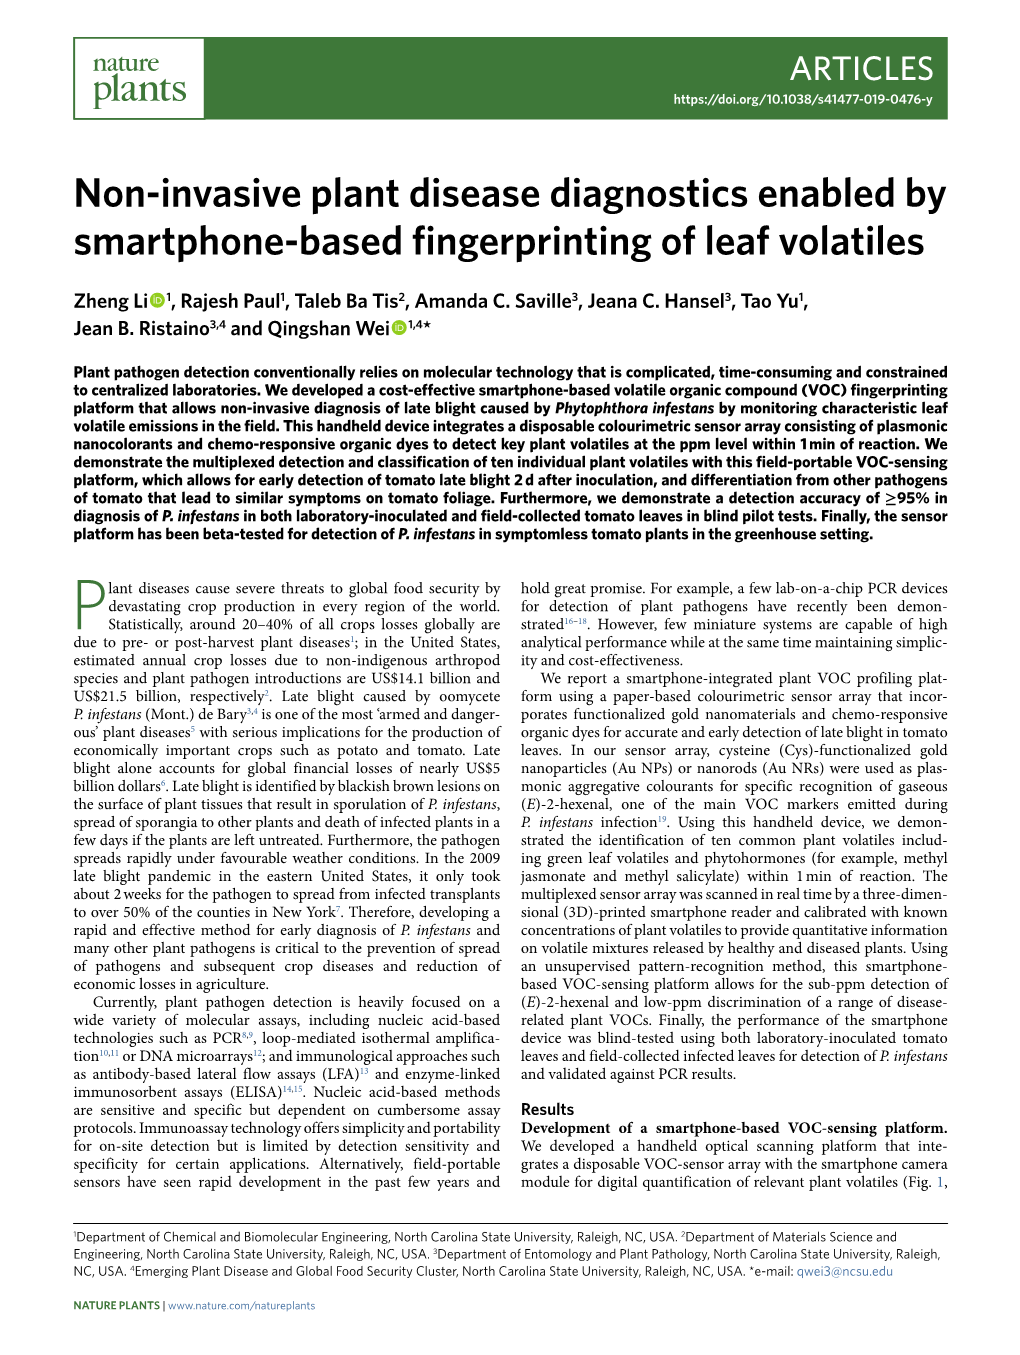 Non-Invasive Plant Disease Diagnostics Enabled by Smartphone-Based Fingerprinting of Leaf Volatiles